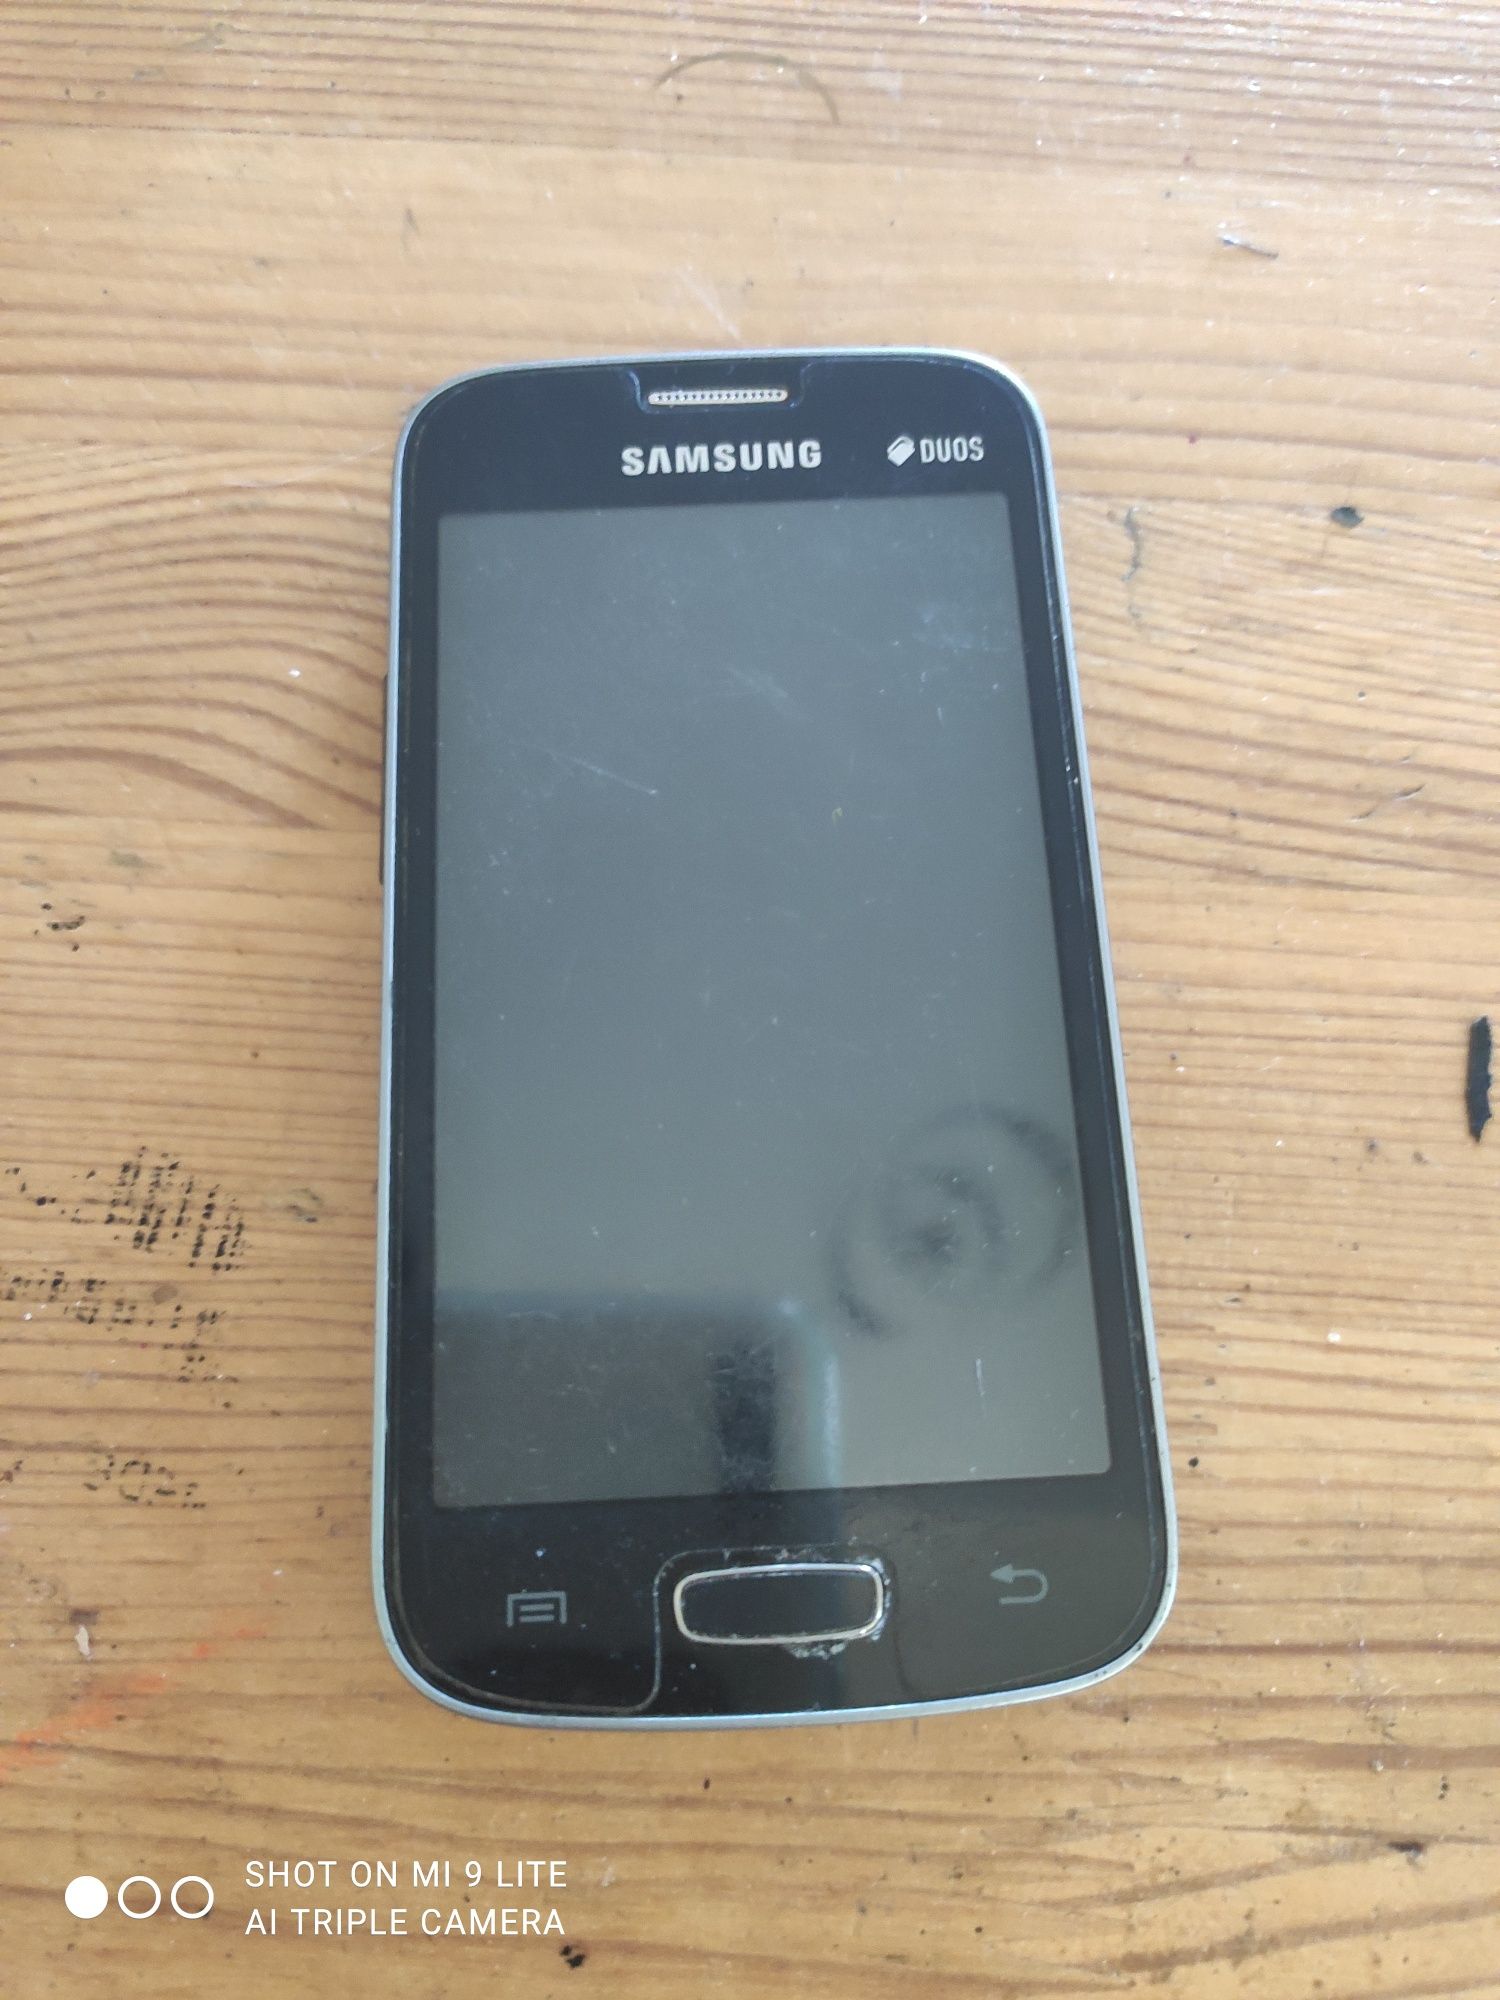 Samsung galaxy star+( GT -S7262), Lenovo a1010a20